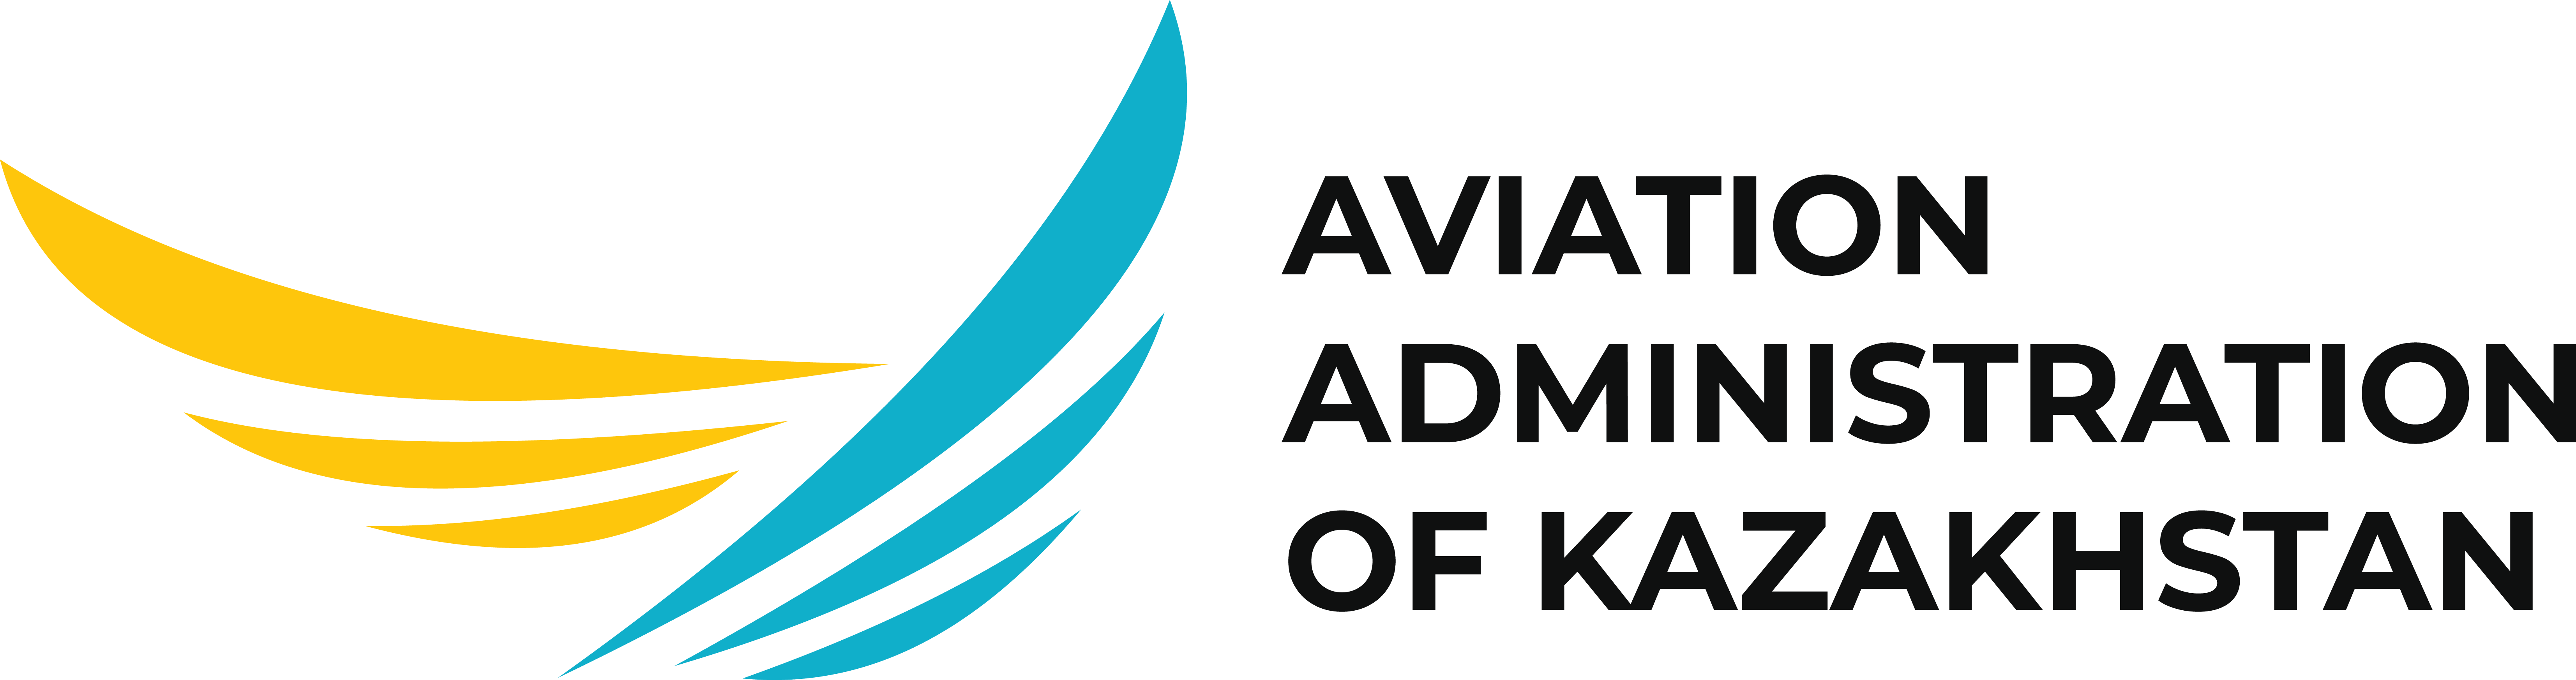 Letecká správa Kazachstánu Air Administration of Kazakhstan